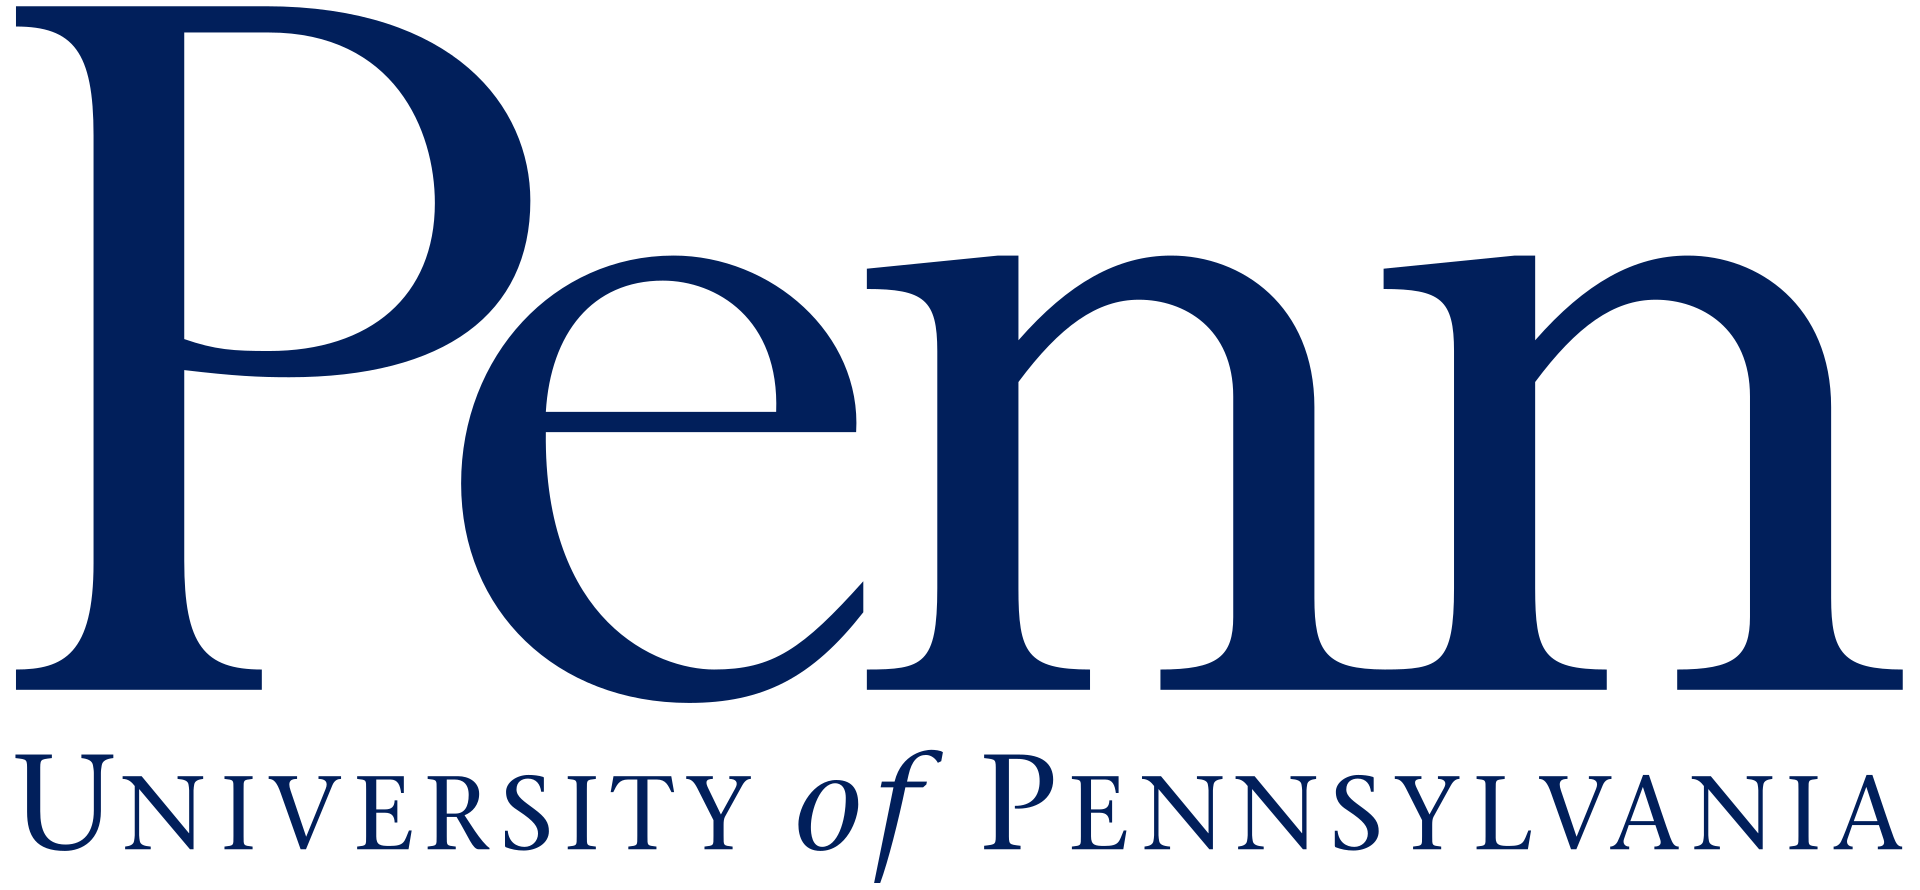 University of Pennsylvania logo, By University of Pennsylvania - http://www.upenn.edu/about/styleguide-logo-branding, Public Domain, http://commons.wikimedia.org/w/index.php?curid=66569976"